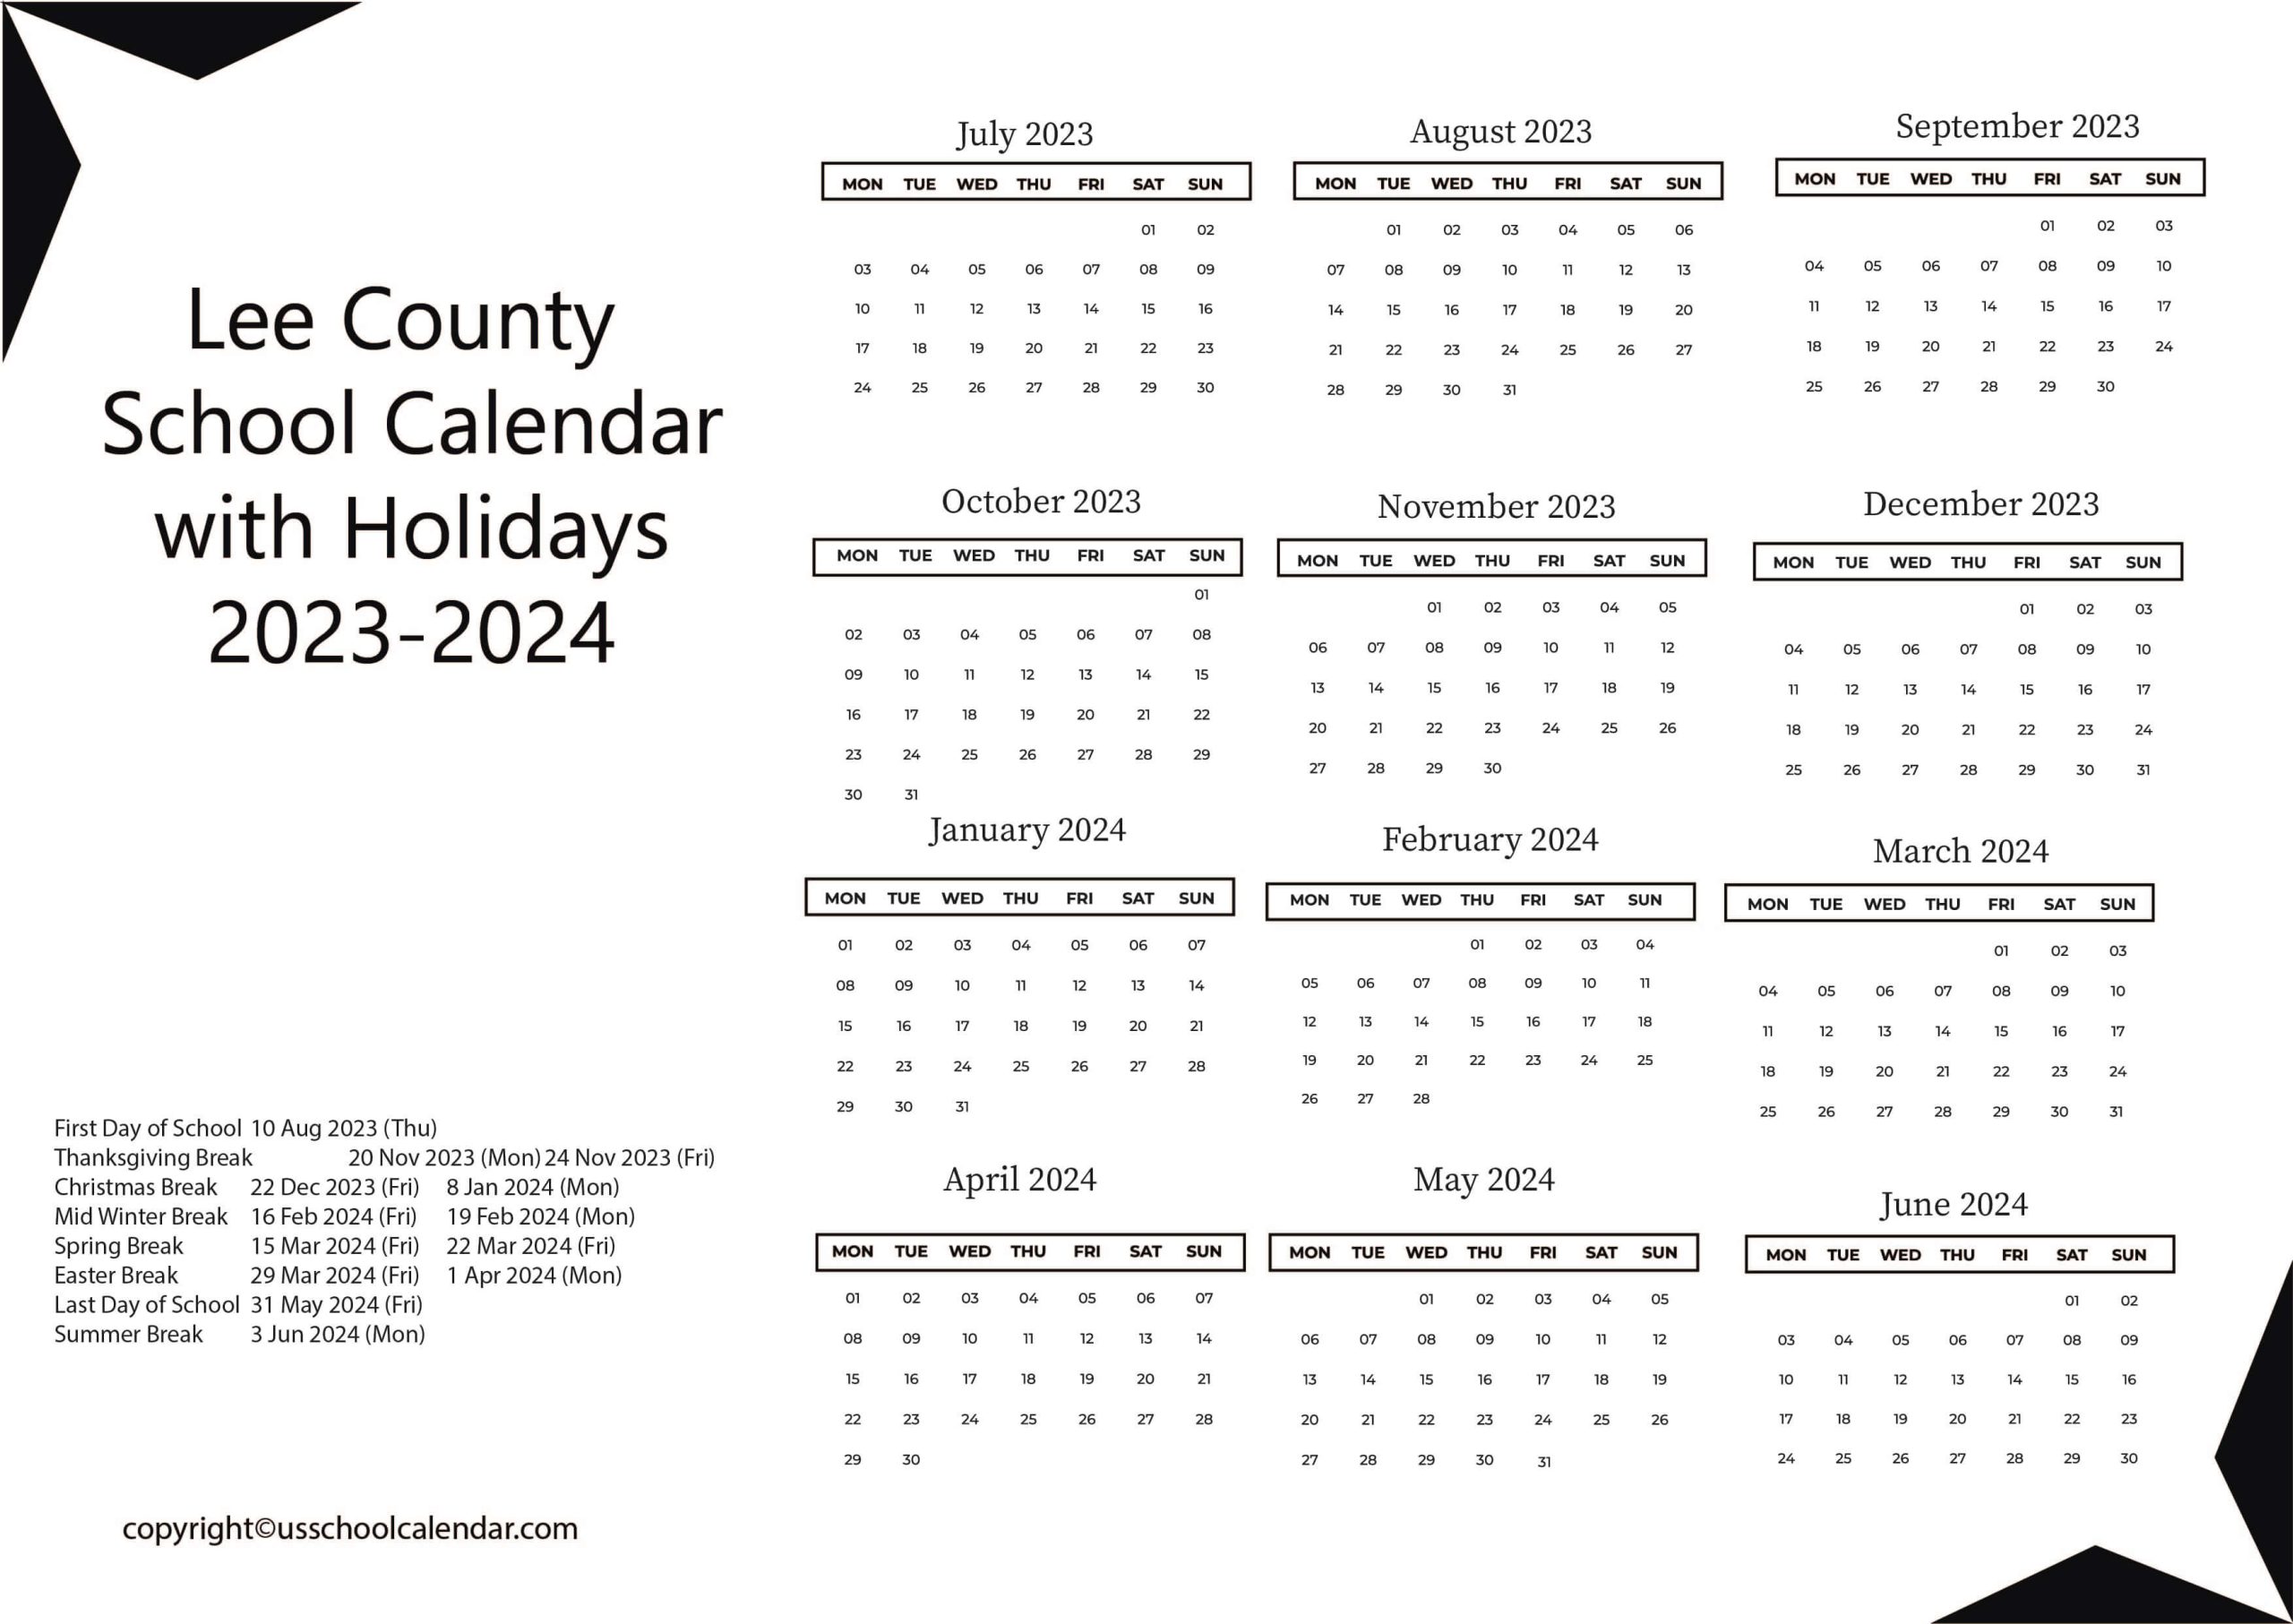 Lee County School Calendar with Holidays 2023-2024